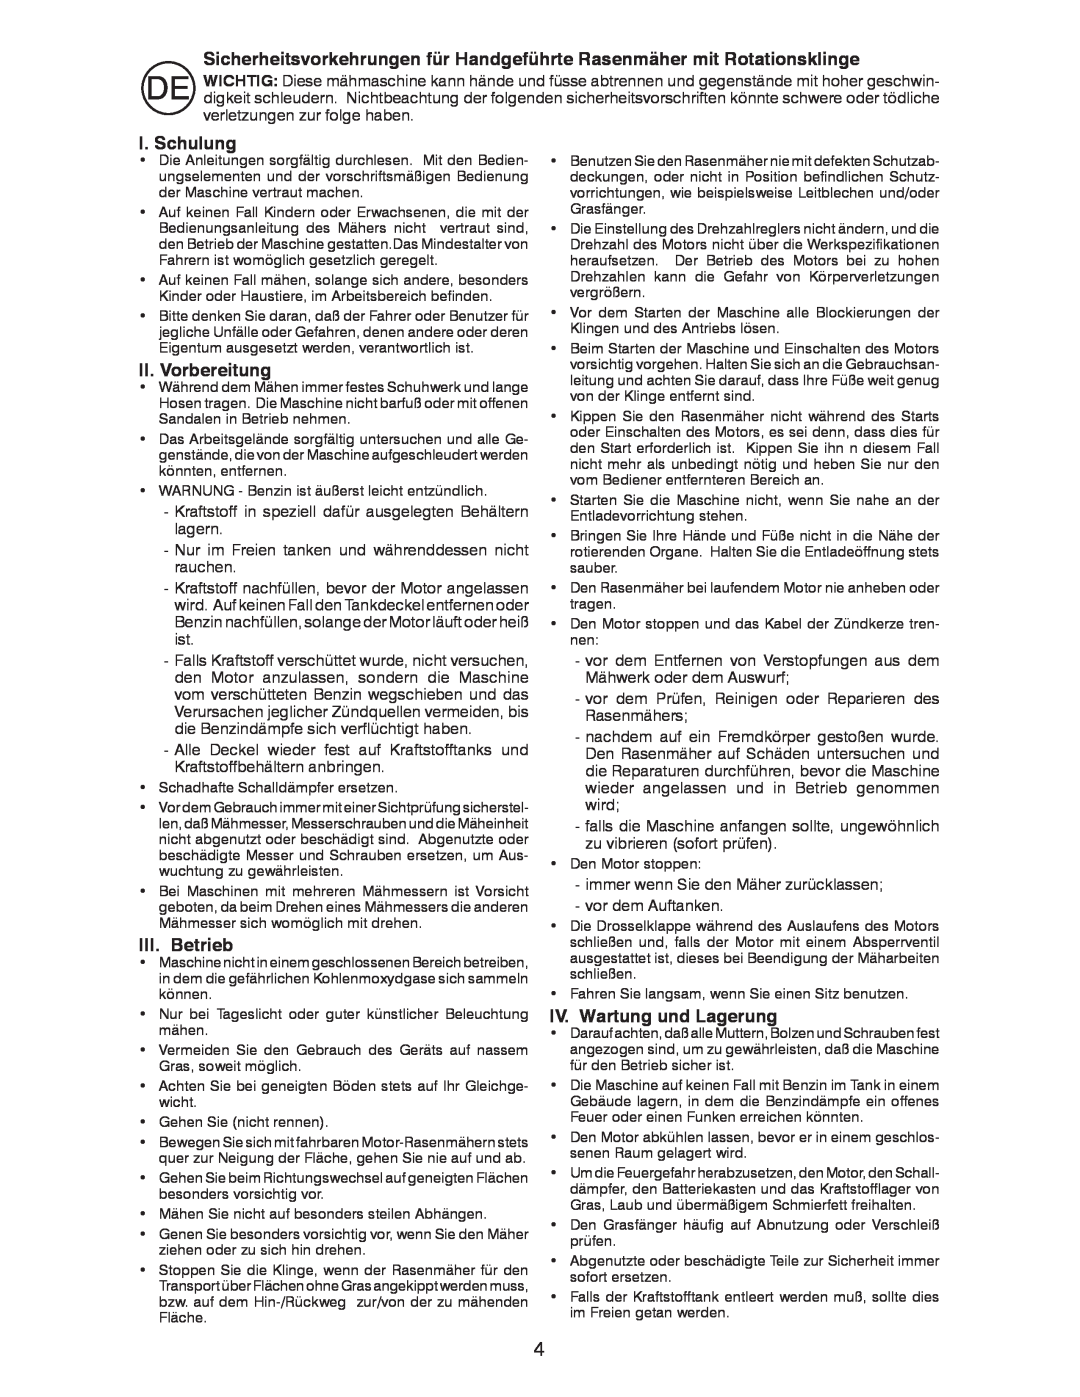 Husqvarna J 55S L instruction manual I. Schulung, II. Vorbereitung, III. Betrieb, IV. Wartung und Lagerung 